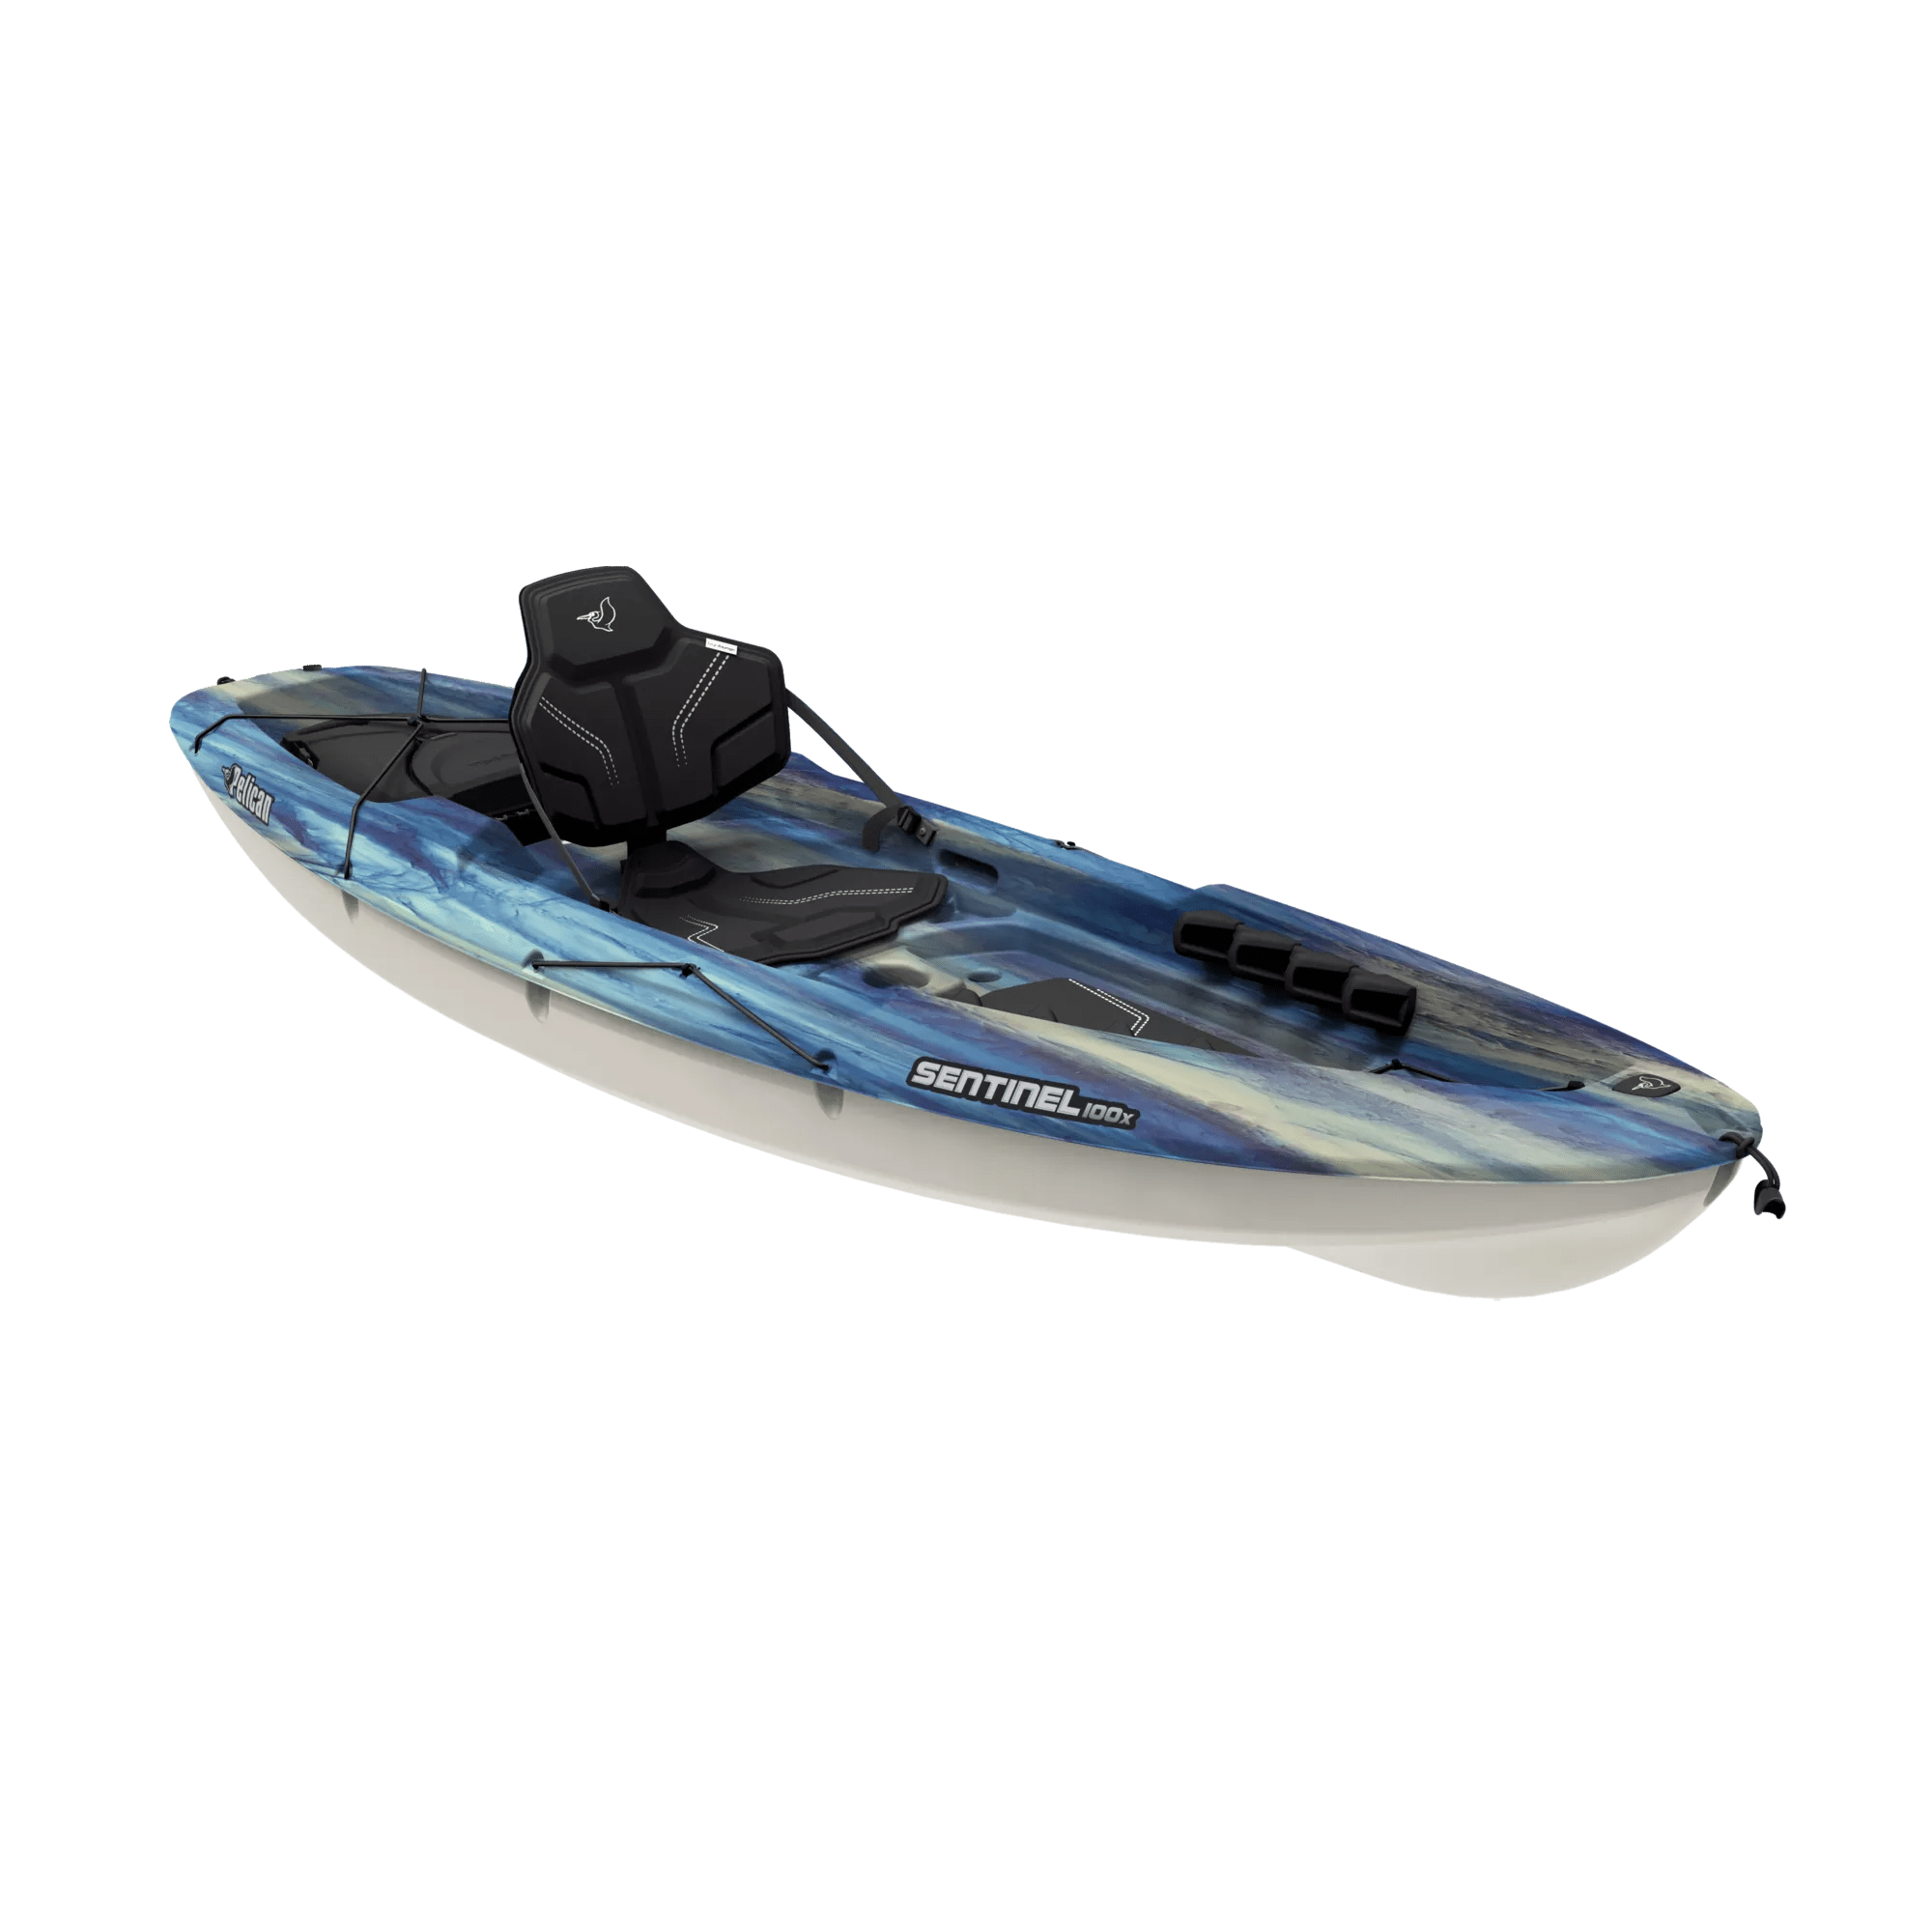 PELICAN - Sentinel 100X EXO Recreational Kayak - Blue - MEF10P103-00 - ISO